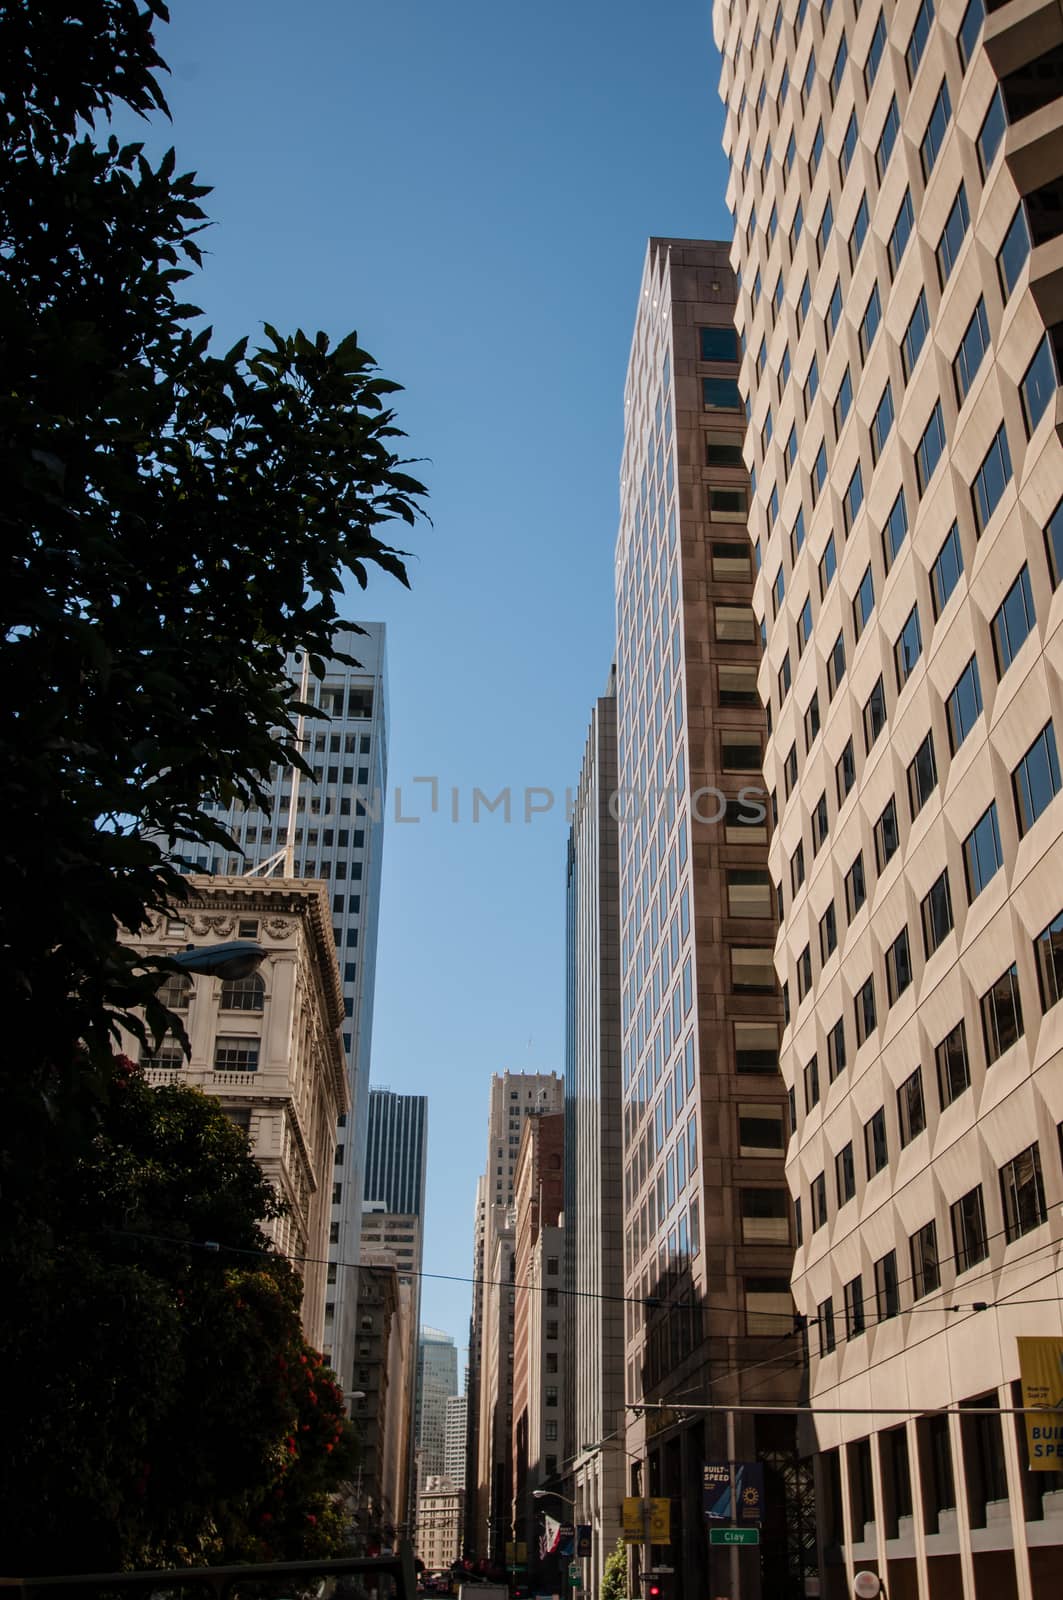 San Francisco street by weltreisendertj